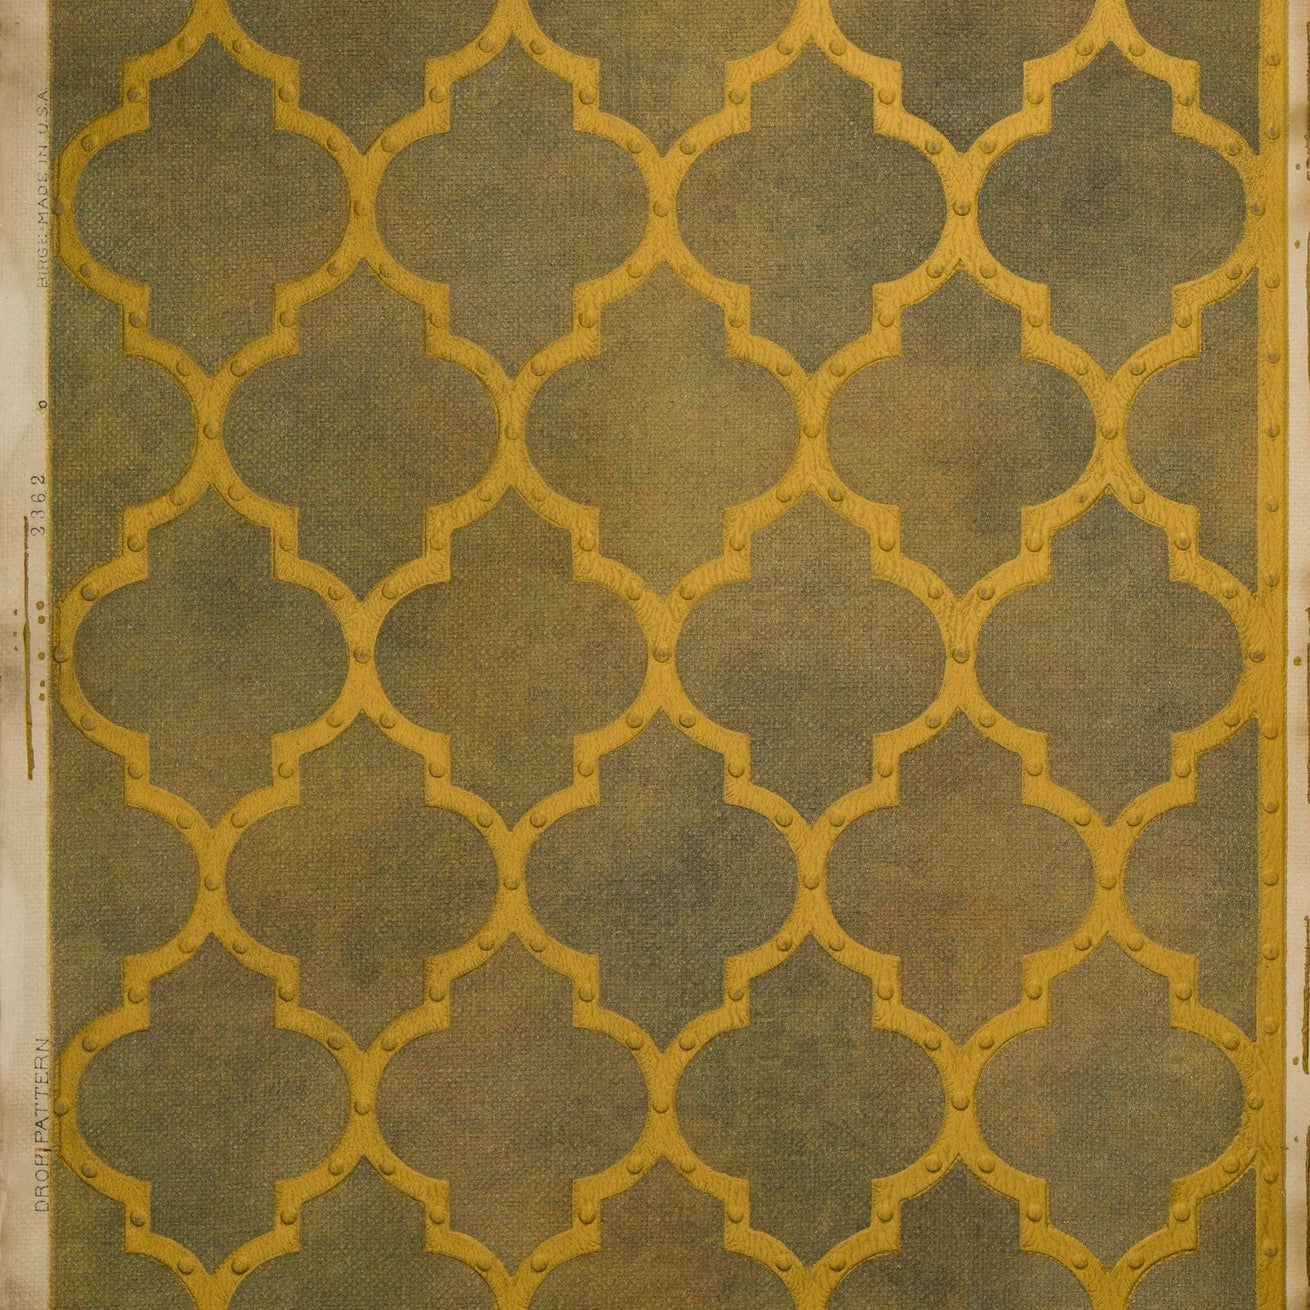 Gold Grille on Burlap - Antique Wallpaper Remnant